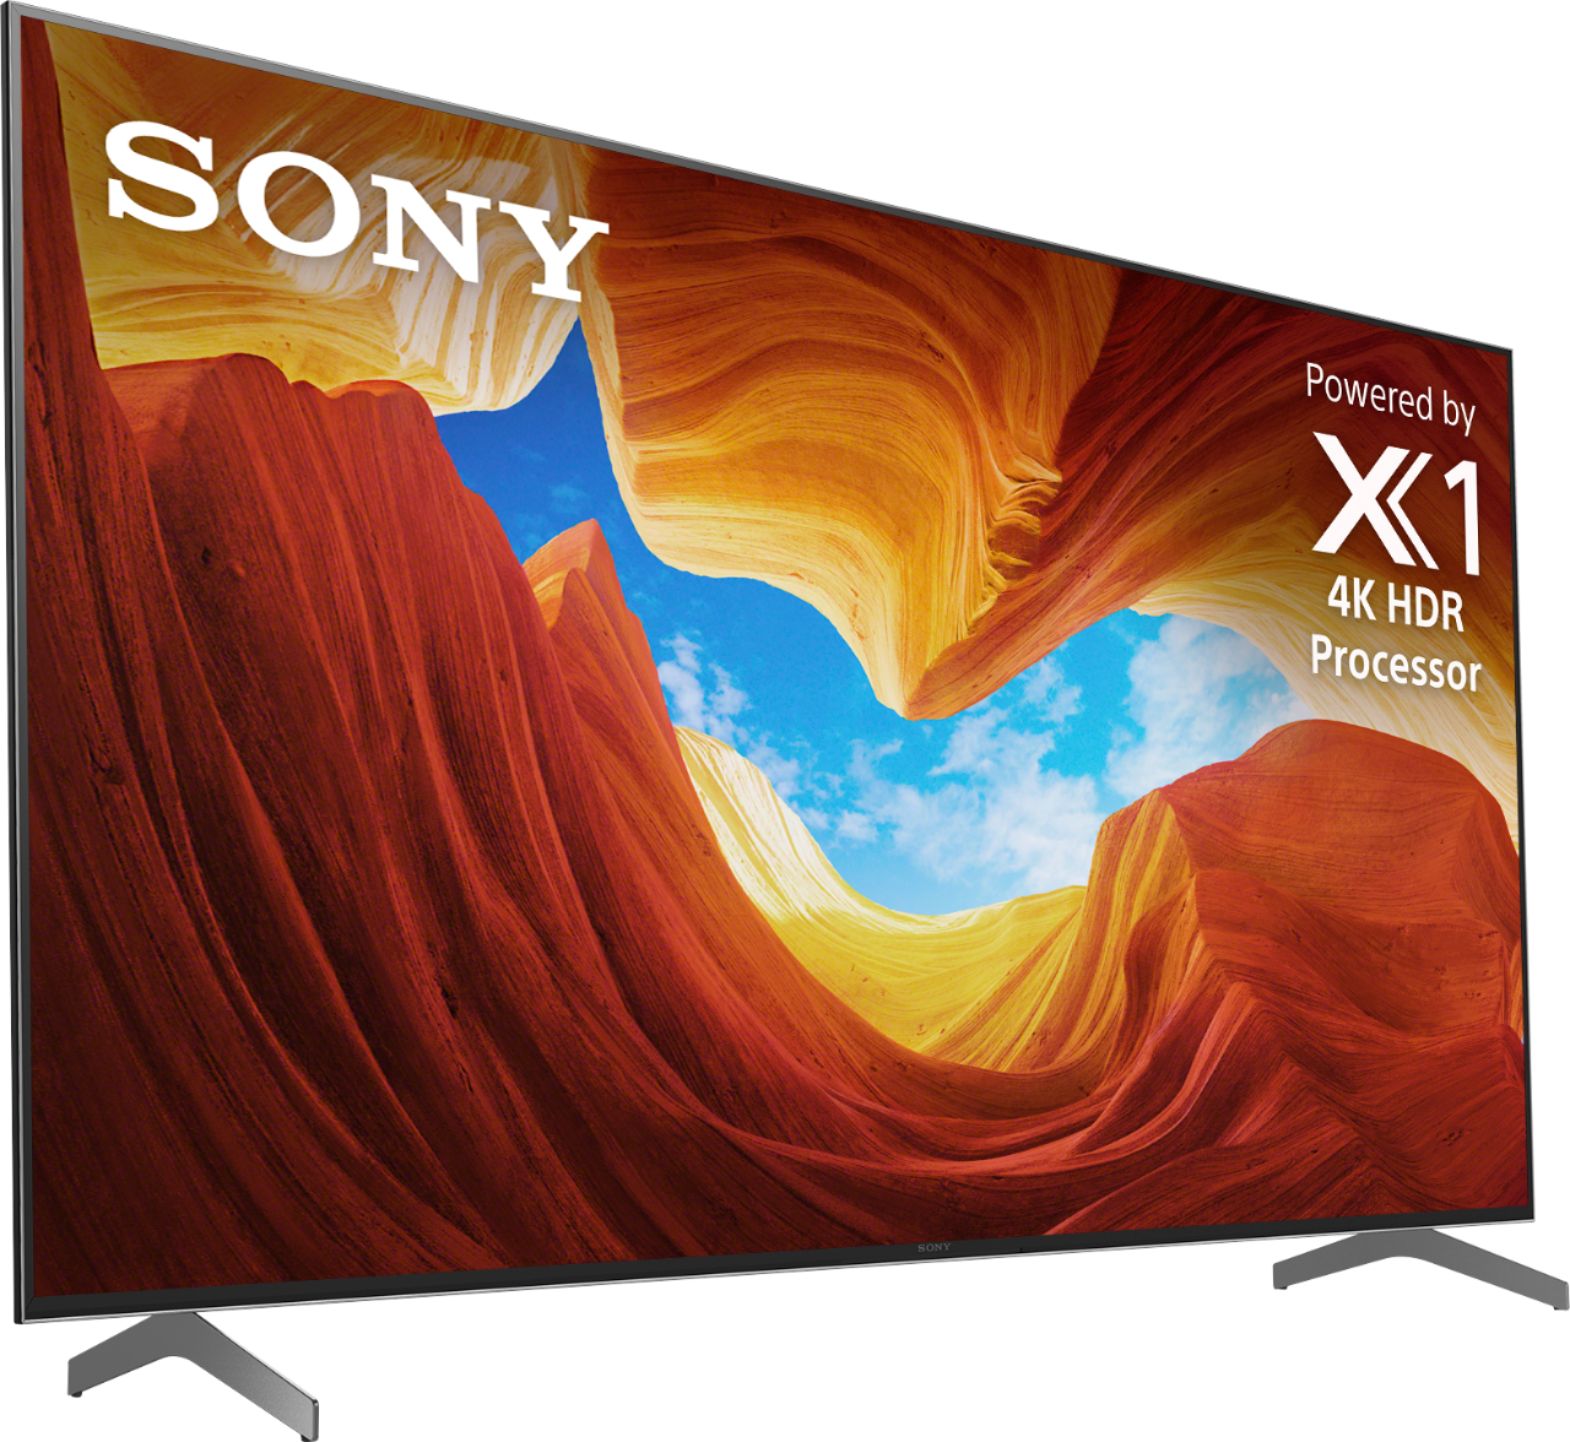 Sony XBR-65X850F 65" XBR Ultra HD 4K HDR10 & HLG 120Hz LED Smart HDTV XBR65X850F 